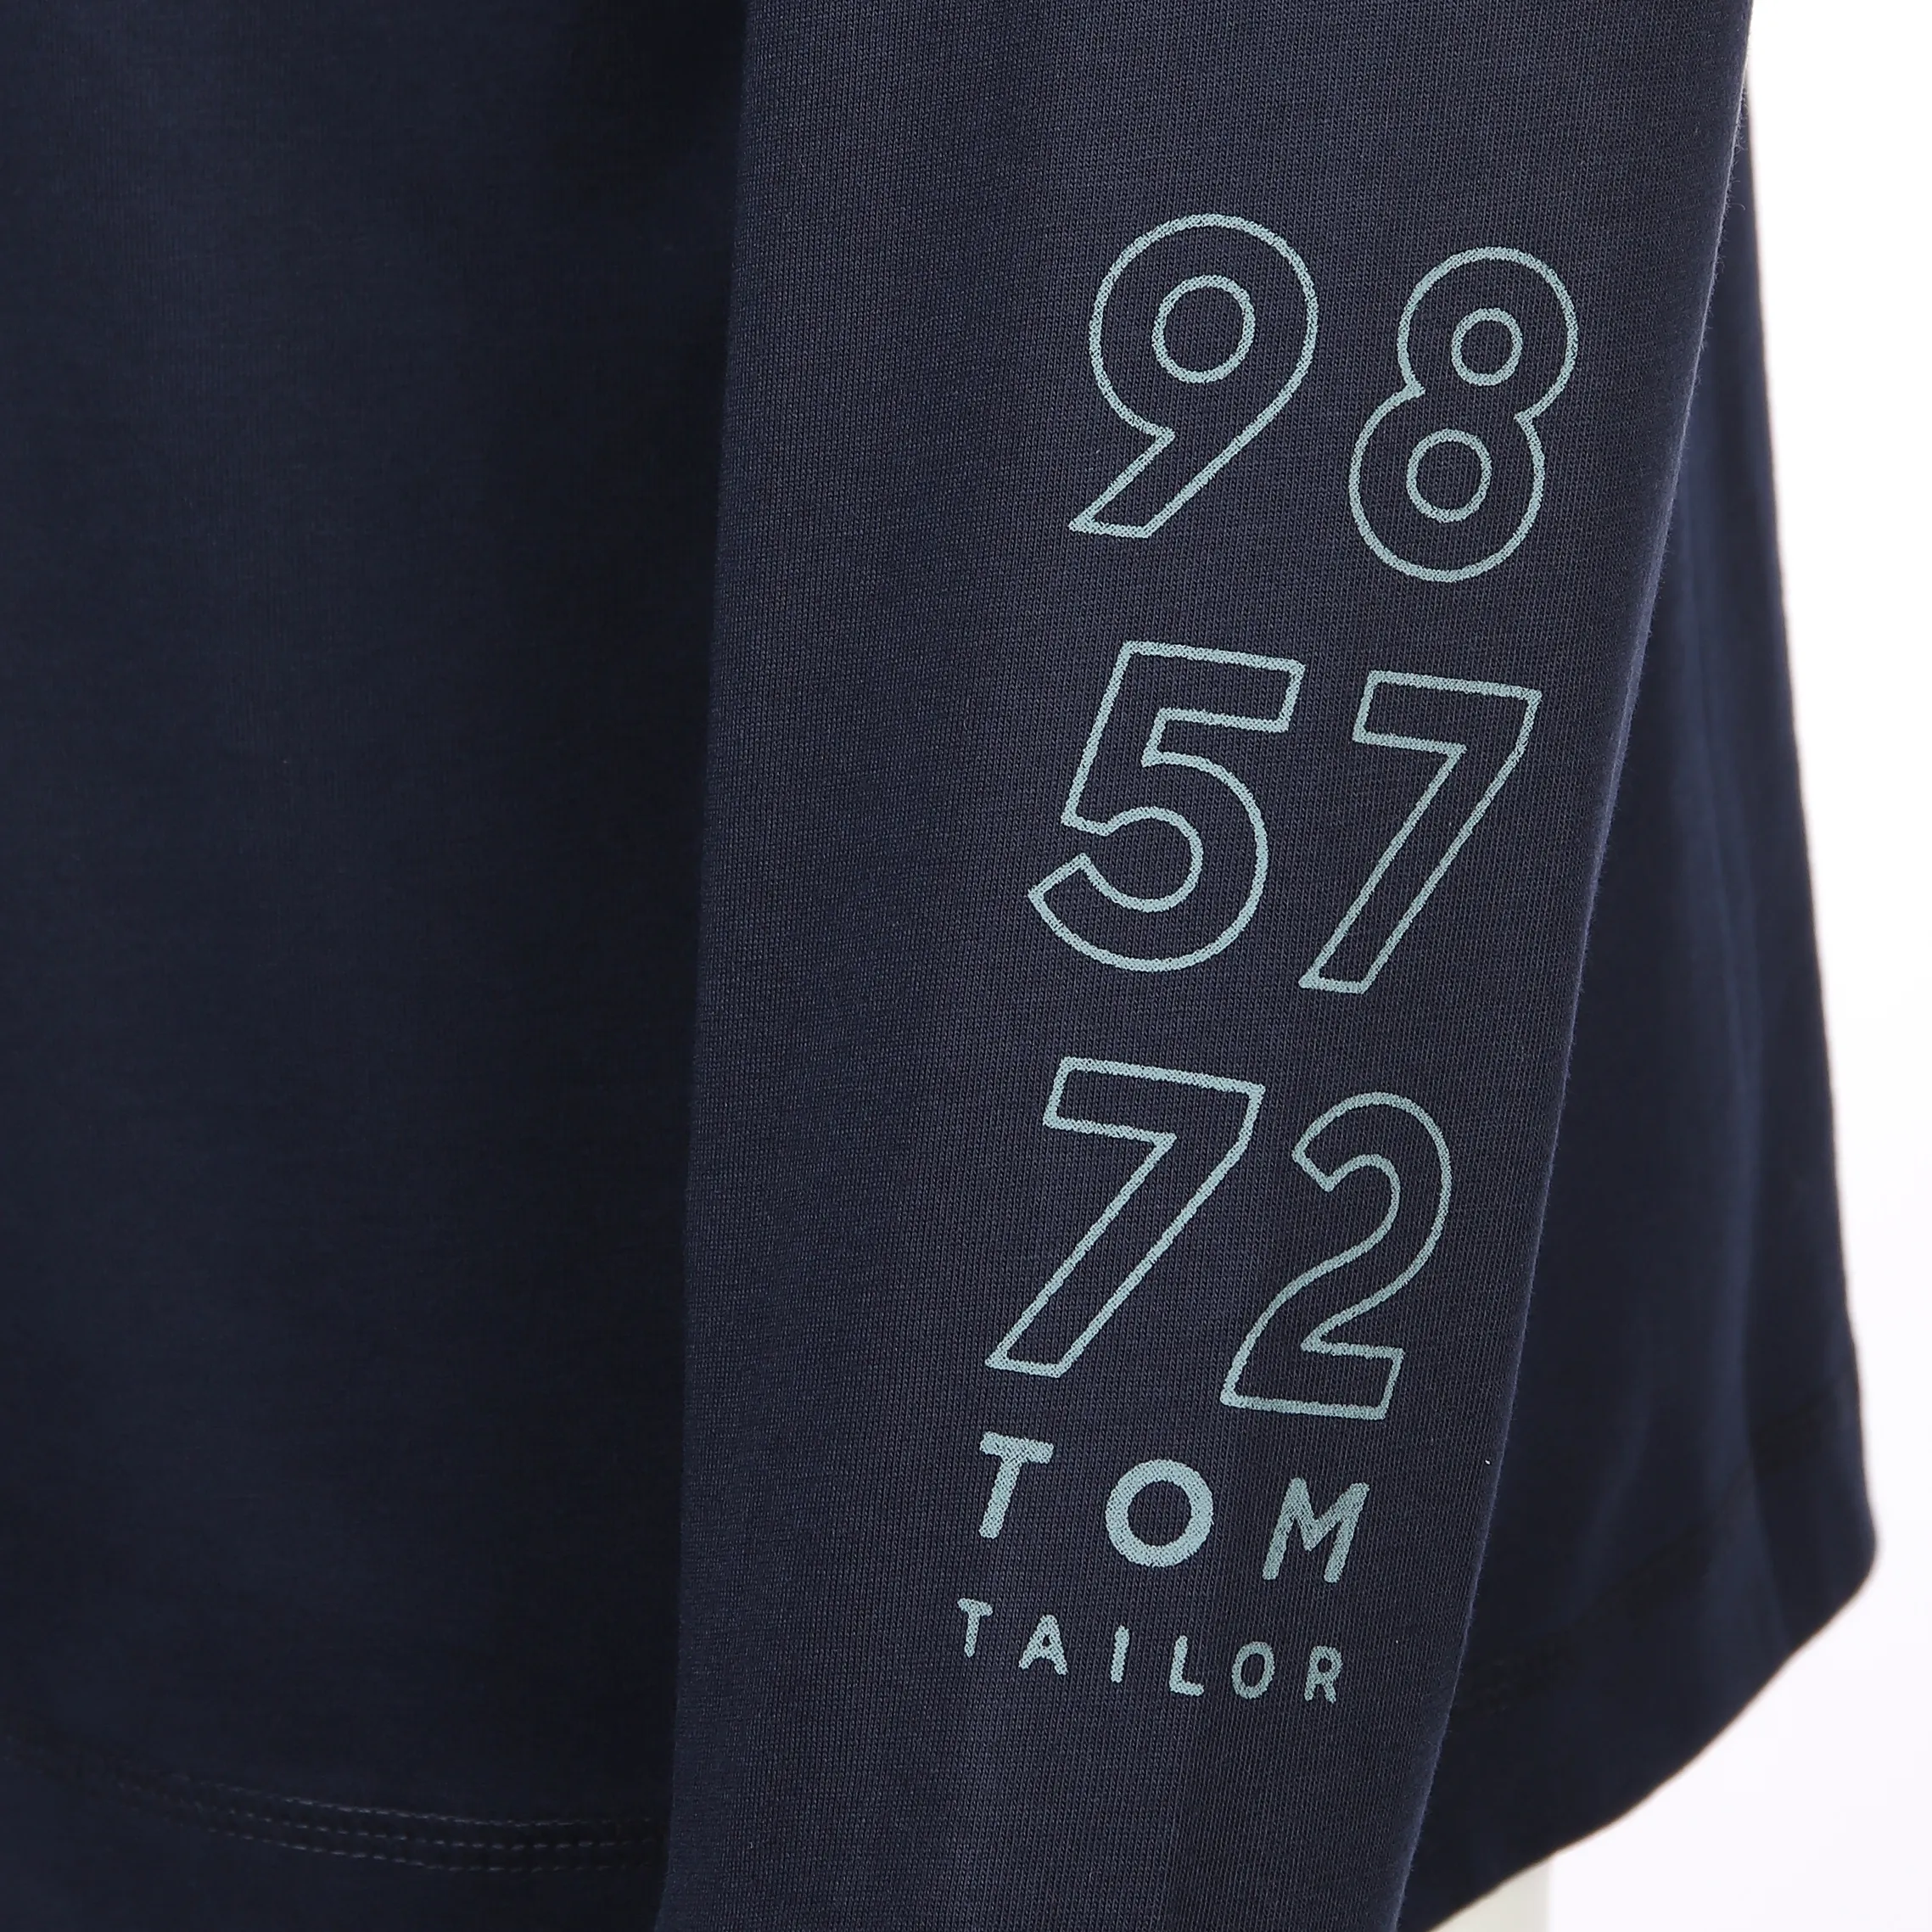 Tom Tailor 1039647 longsleeve with hood Blau 887467 10668 4